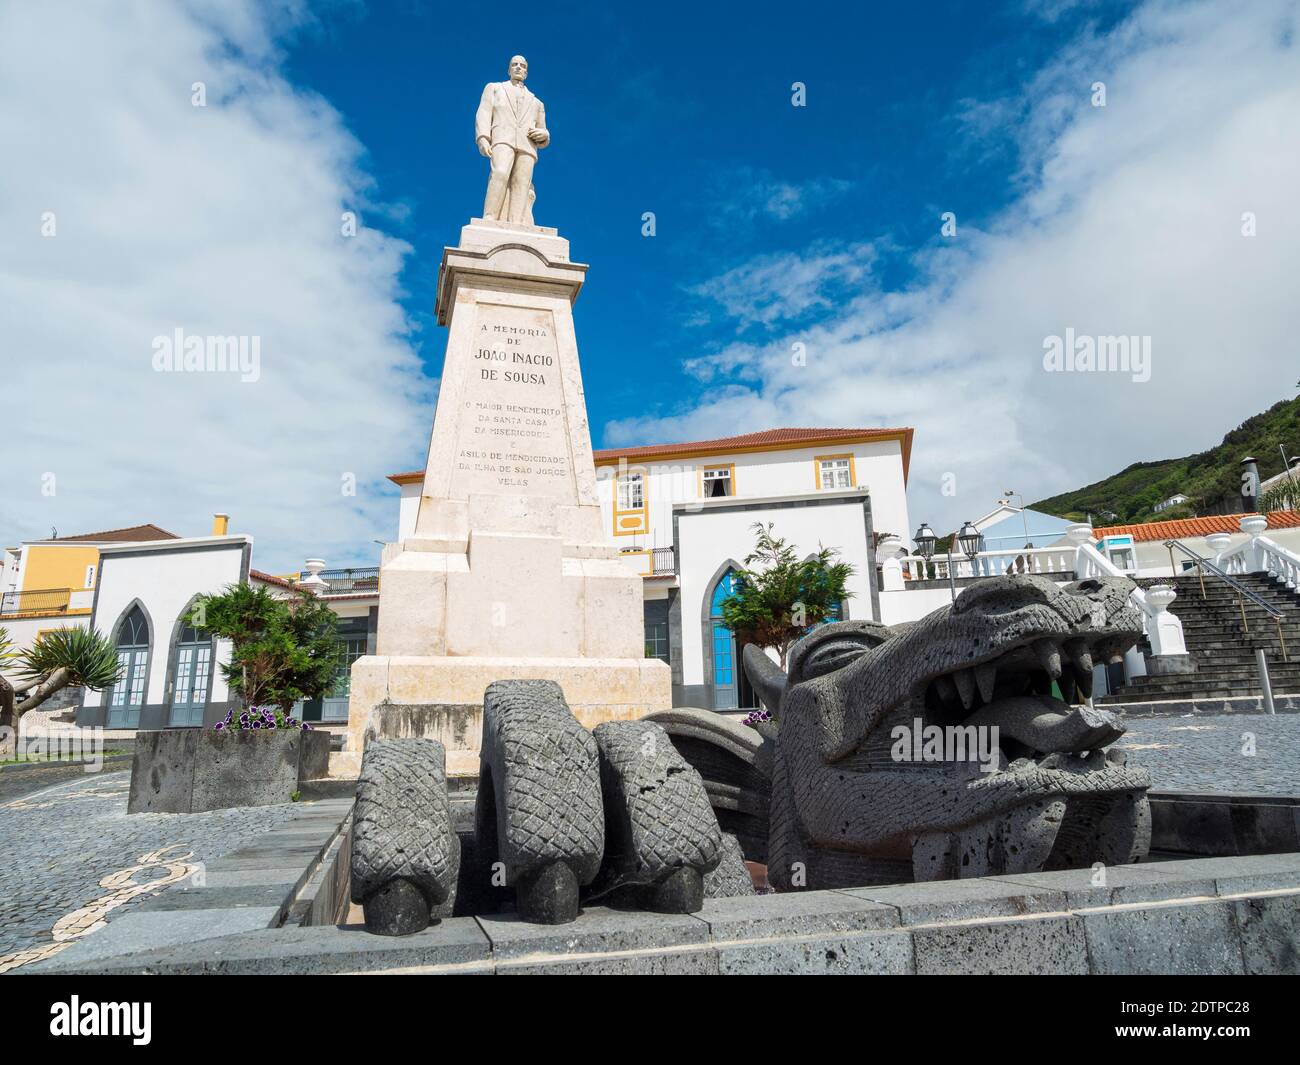 Monument commemorating Joao Inacio de Sousa at square Joao Pereira.  Velas, the main town on the island. Sao Jorge Island, an island in the Azores (Il Stock Photo